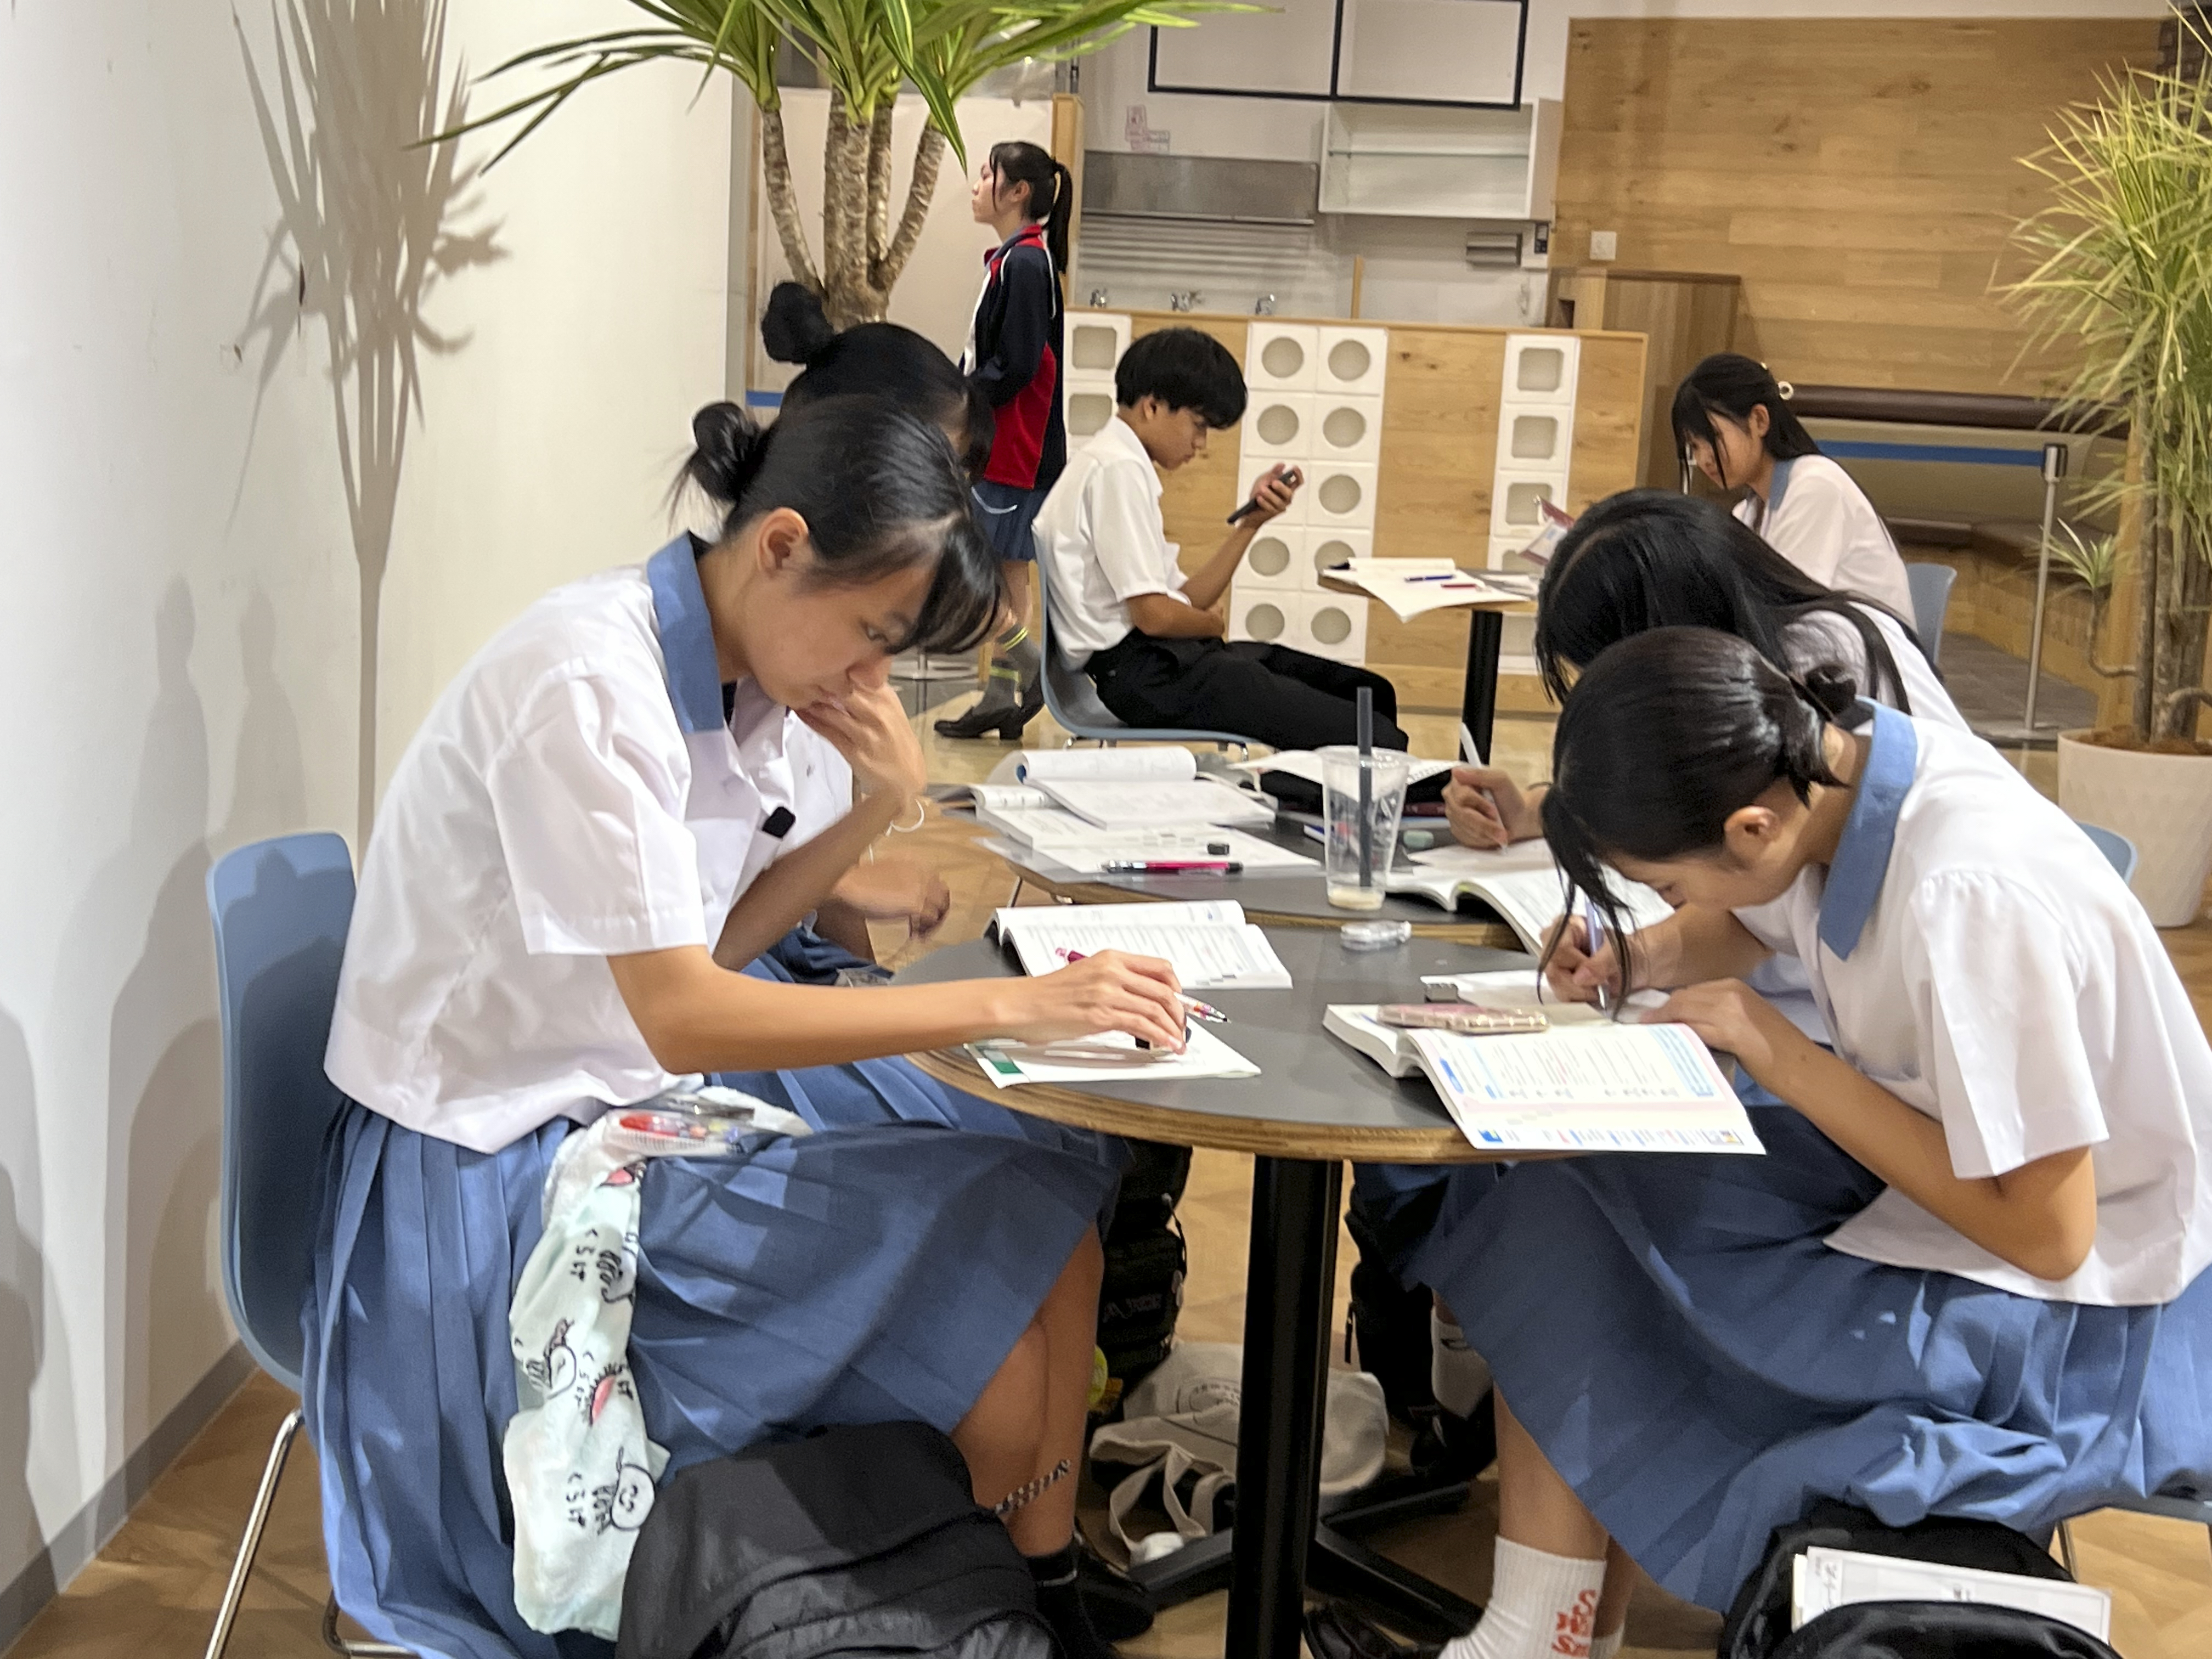 Homework in the café, Japan